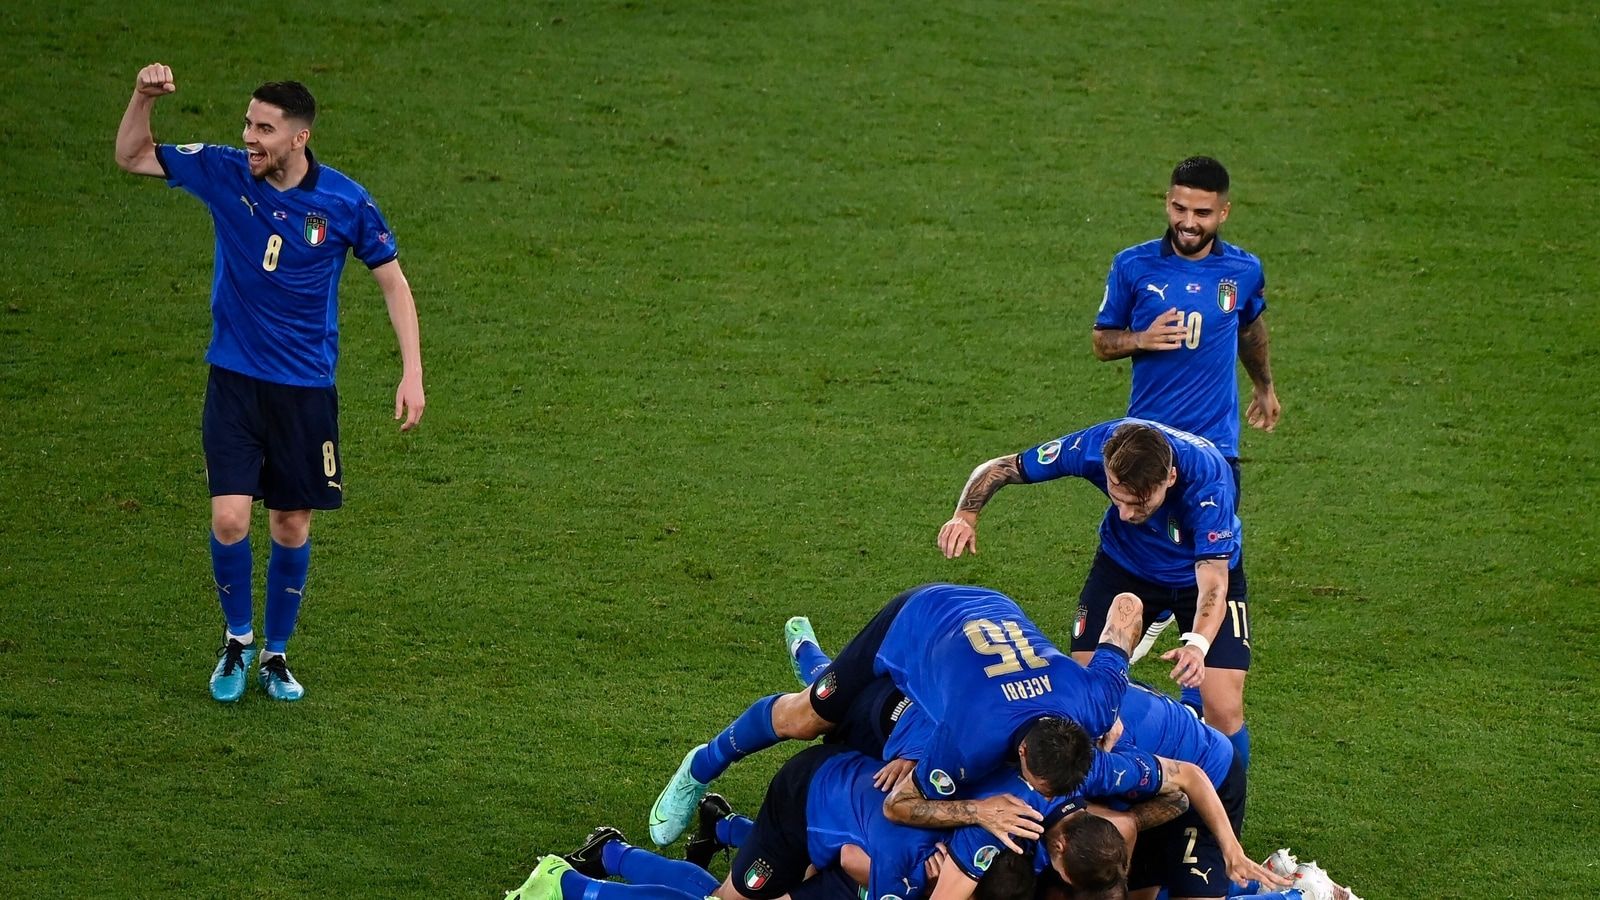 Euro Italy vs Switzerland: Action in image